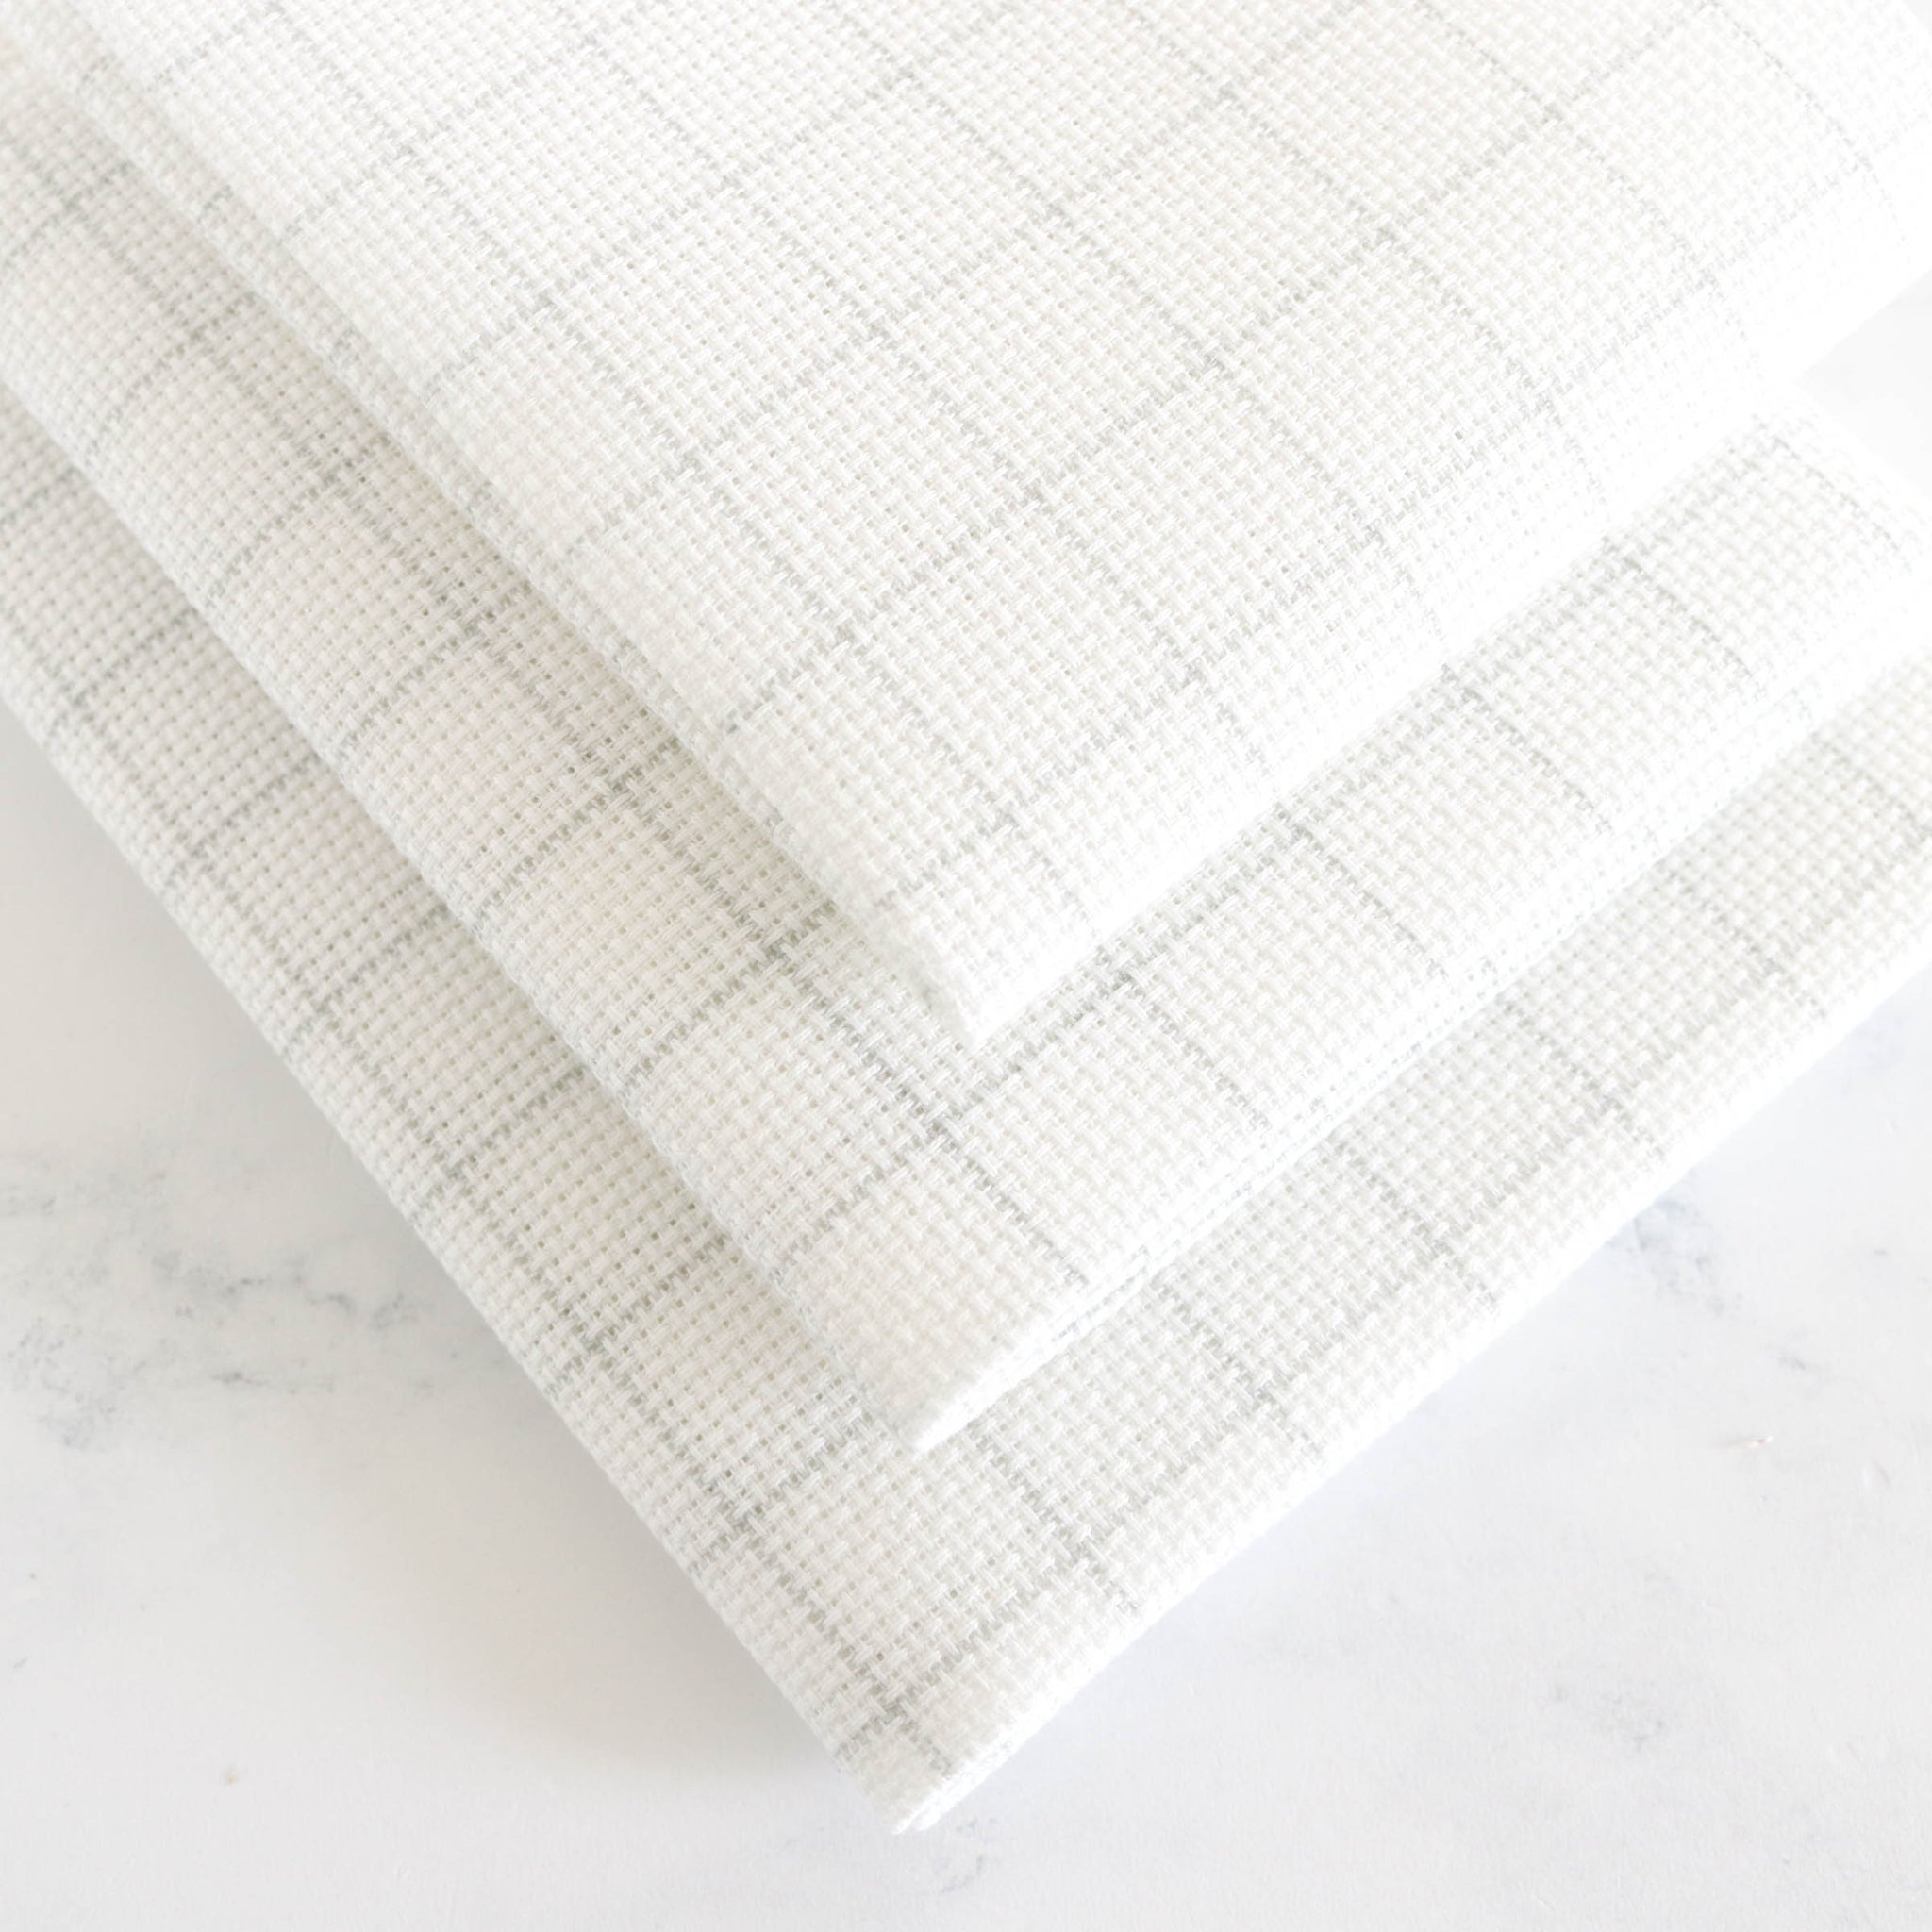 Aida Cloth 14 Count Cross Stitch Fabric,19×28inch (14CT, Off White)